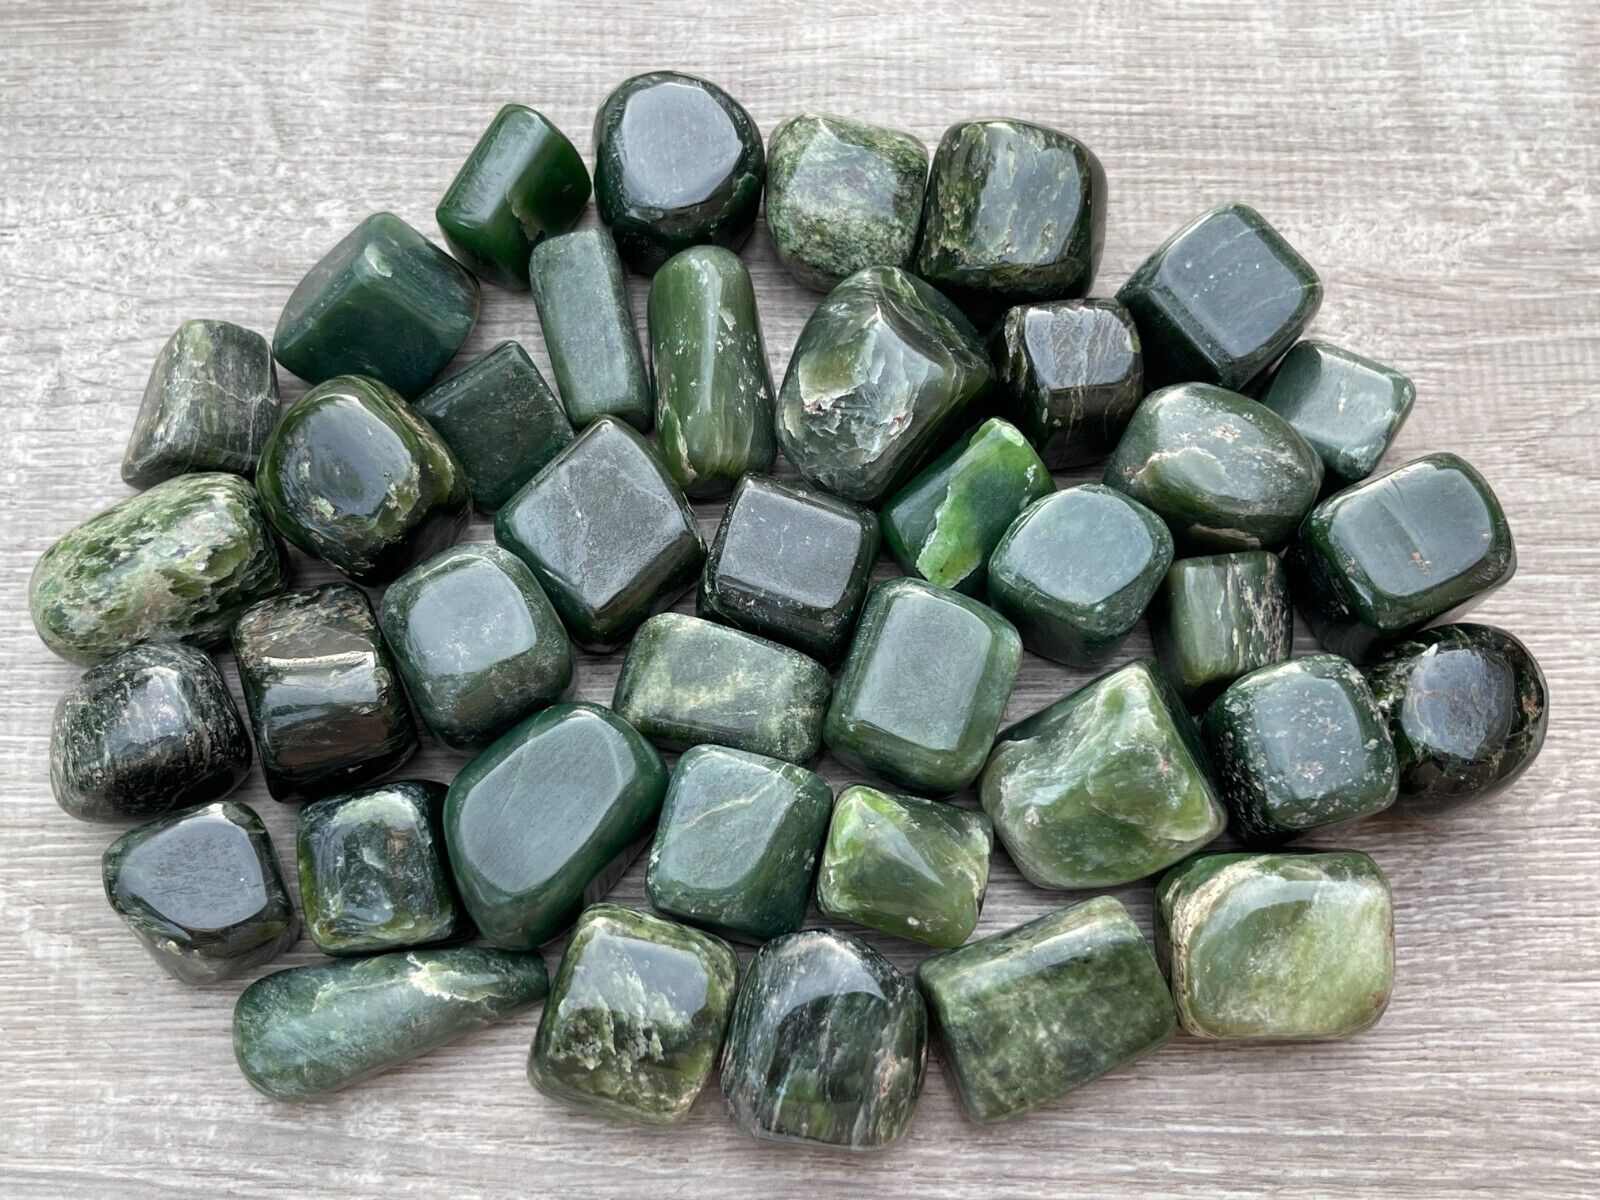 Nephrite Jade Tumbled Stones, 1-1.5 Inch Nephrite Jade Crystals, Healing Crystal